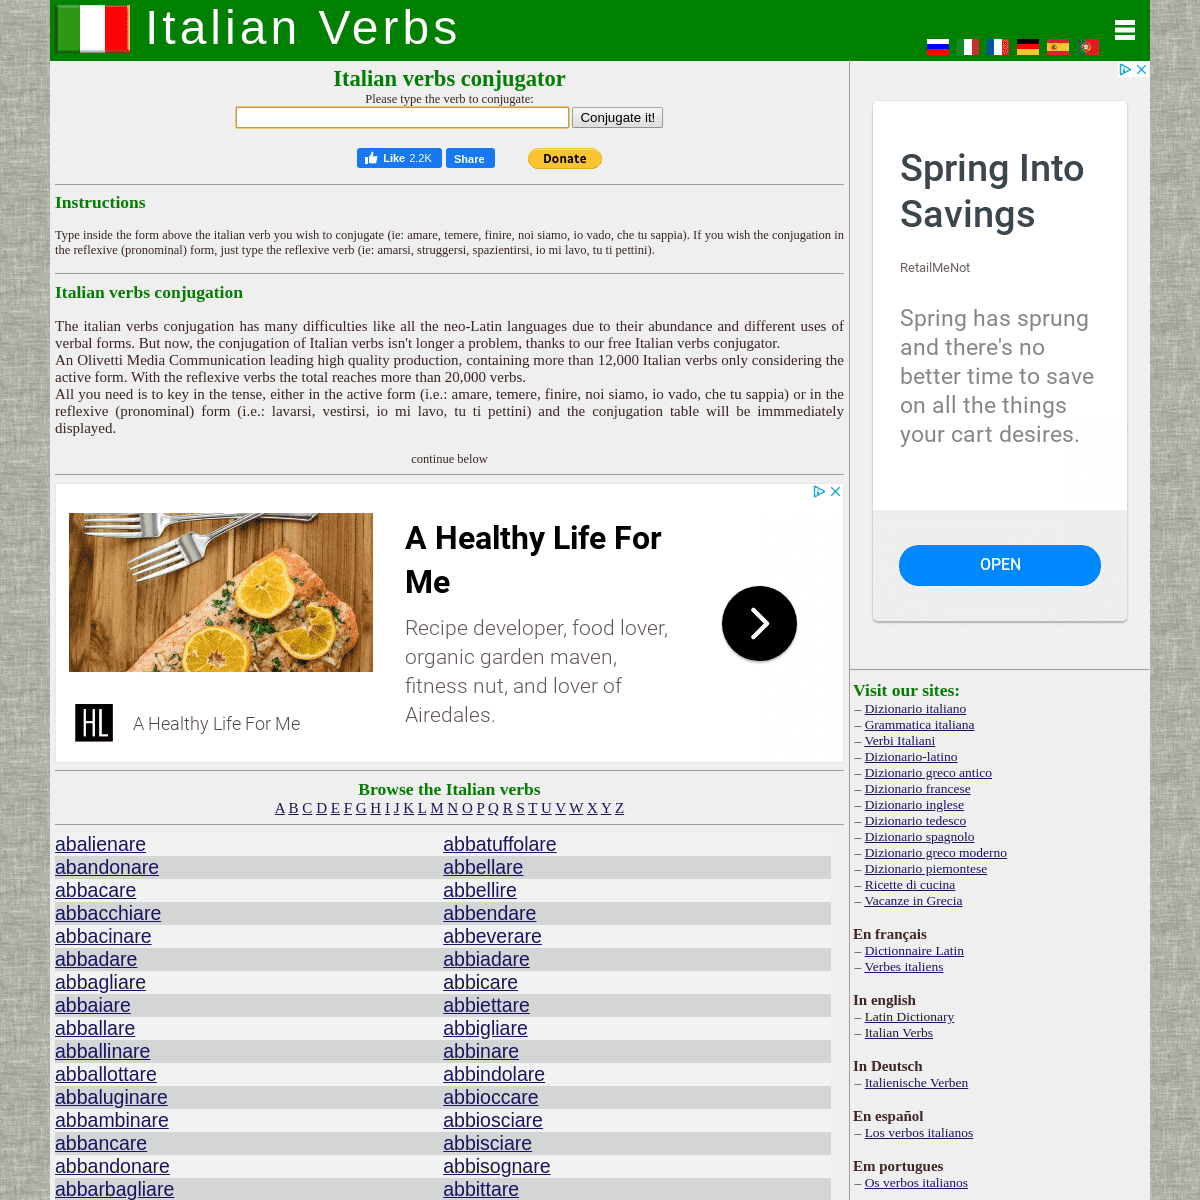 A complete backup of italian-verbs.com